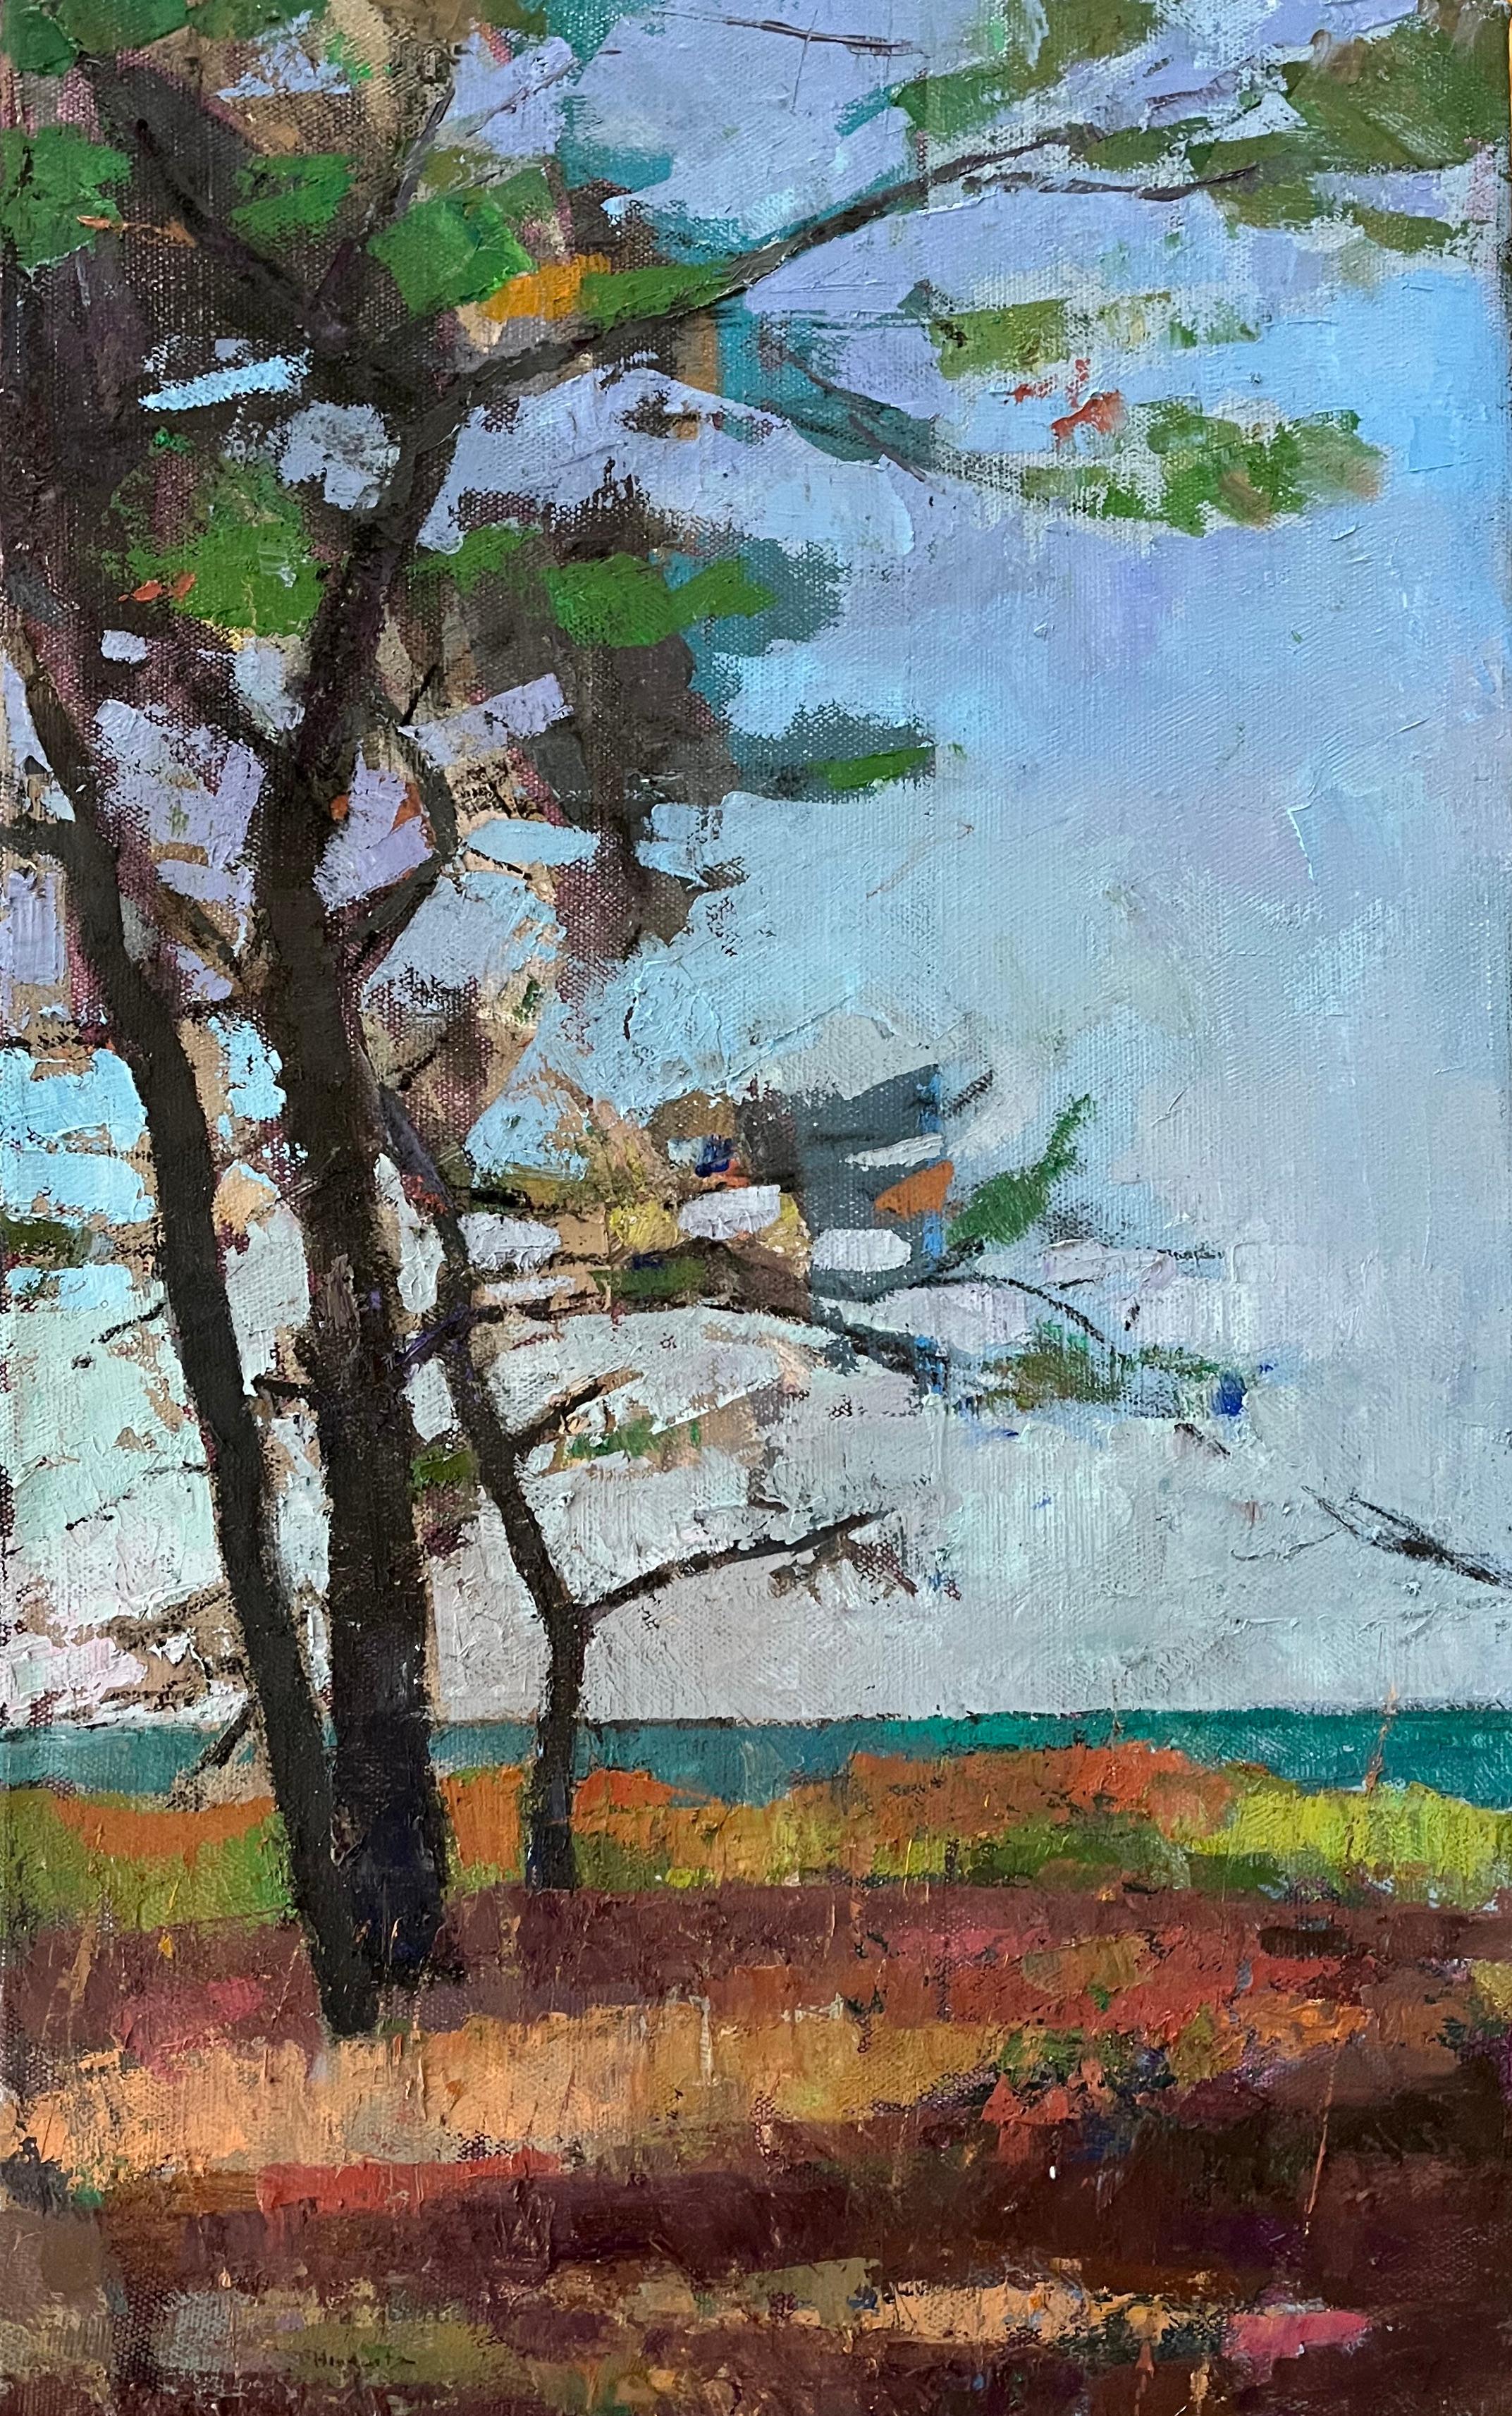 Larry Horowitz Landscape Painting – „Pines by the Sea“ vertikales Ölgemälde von Bäumen mit tealfarbenem Meer hinter